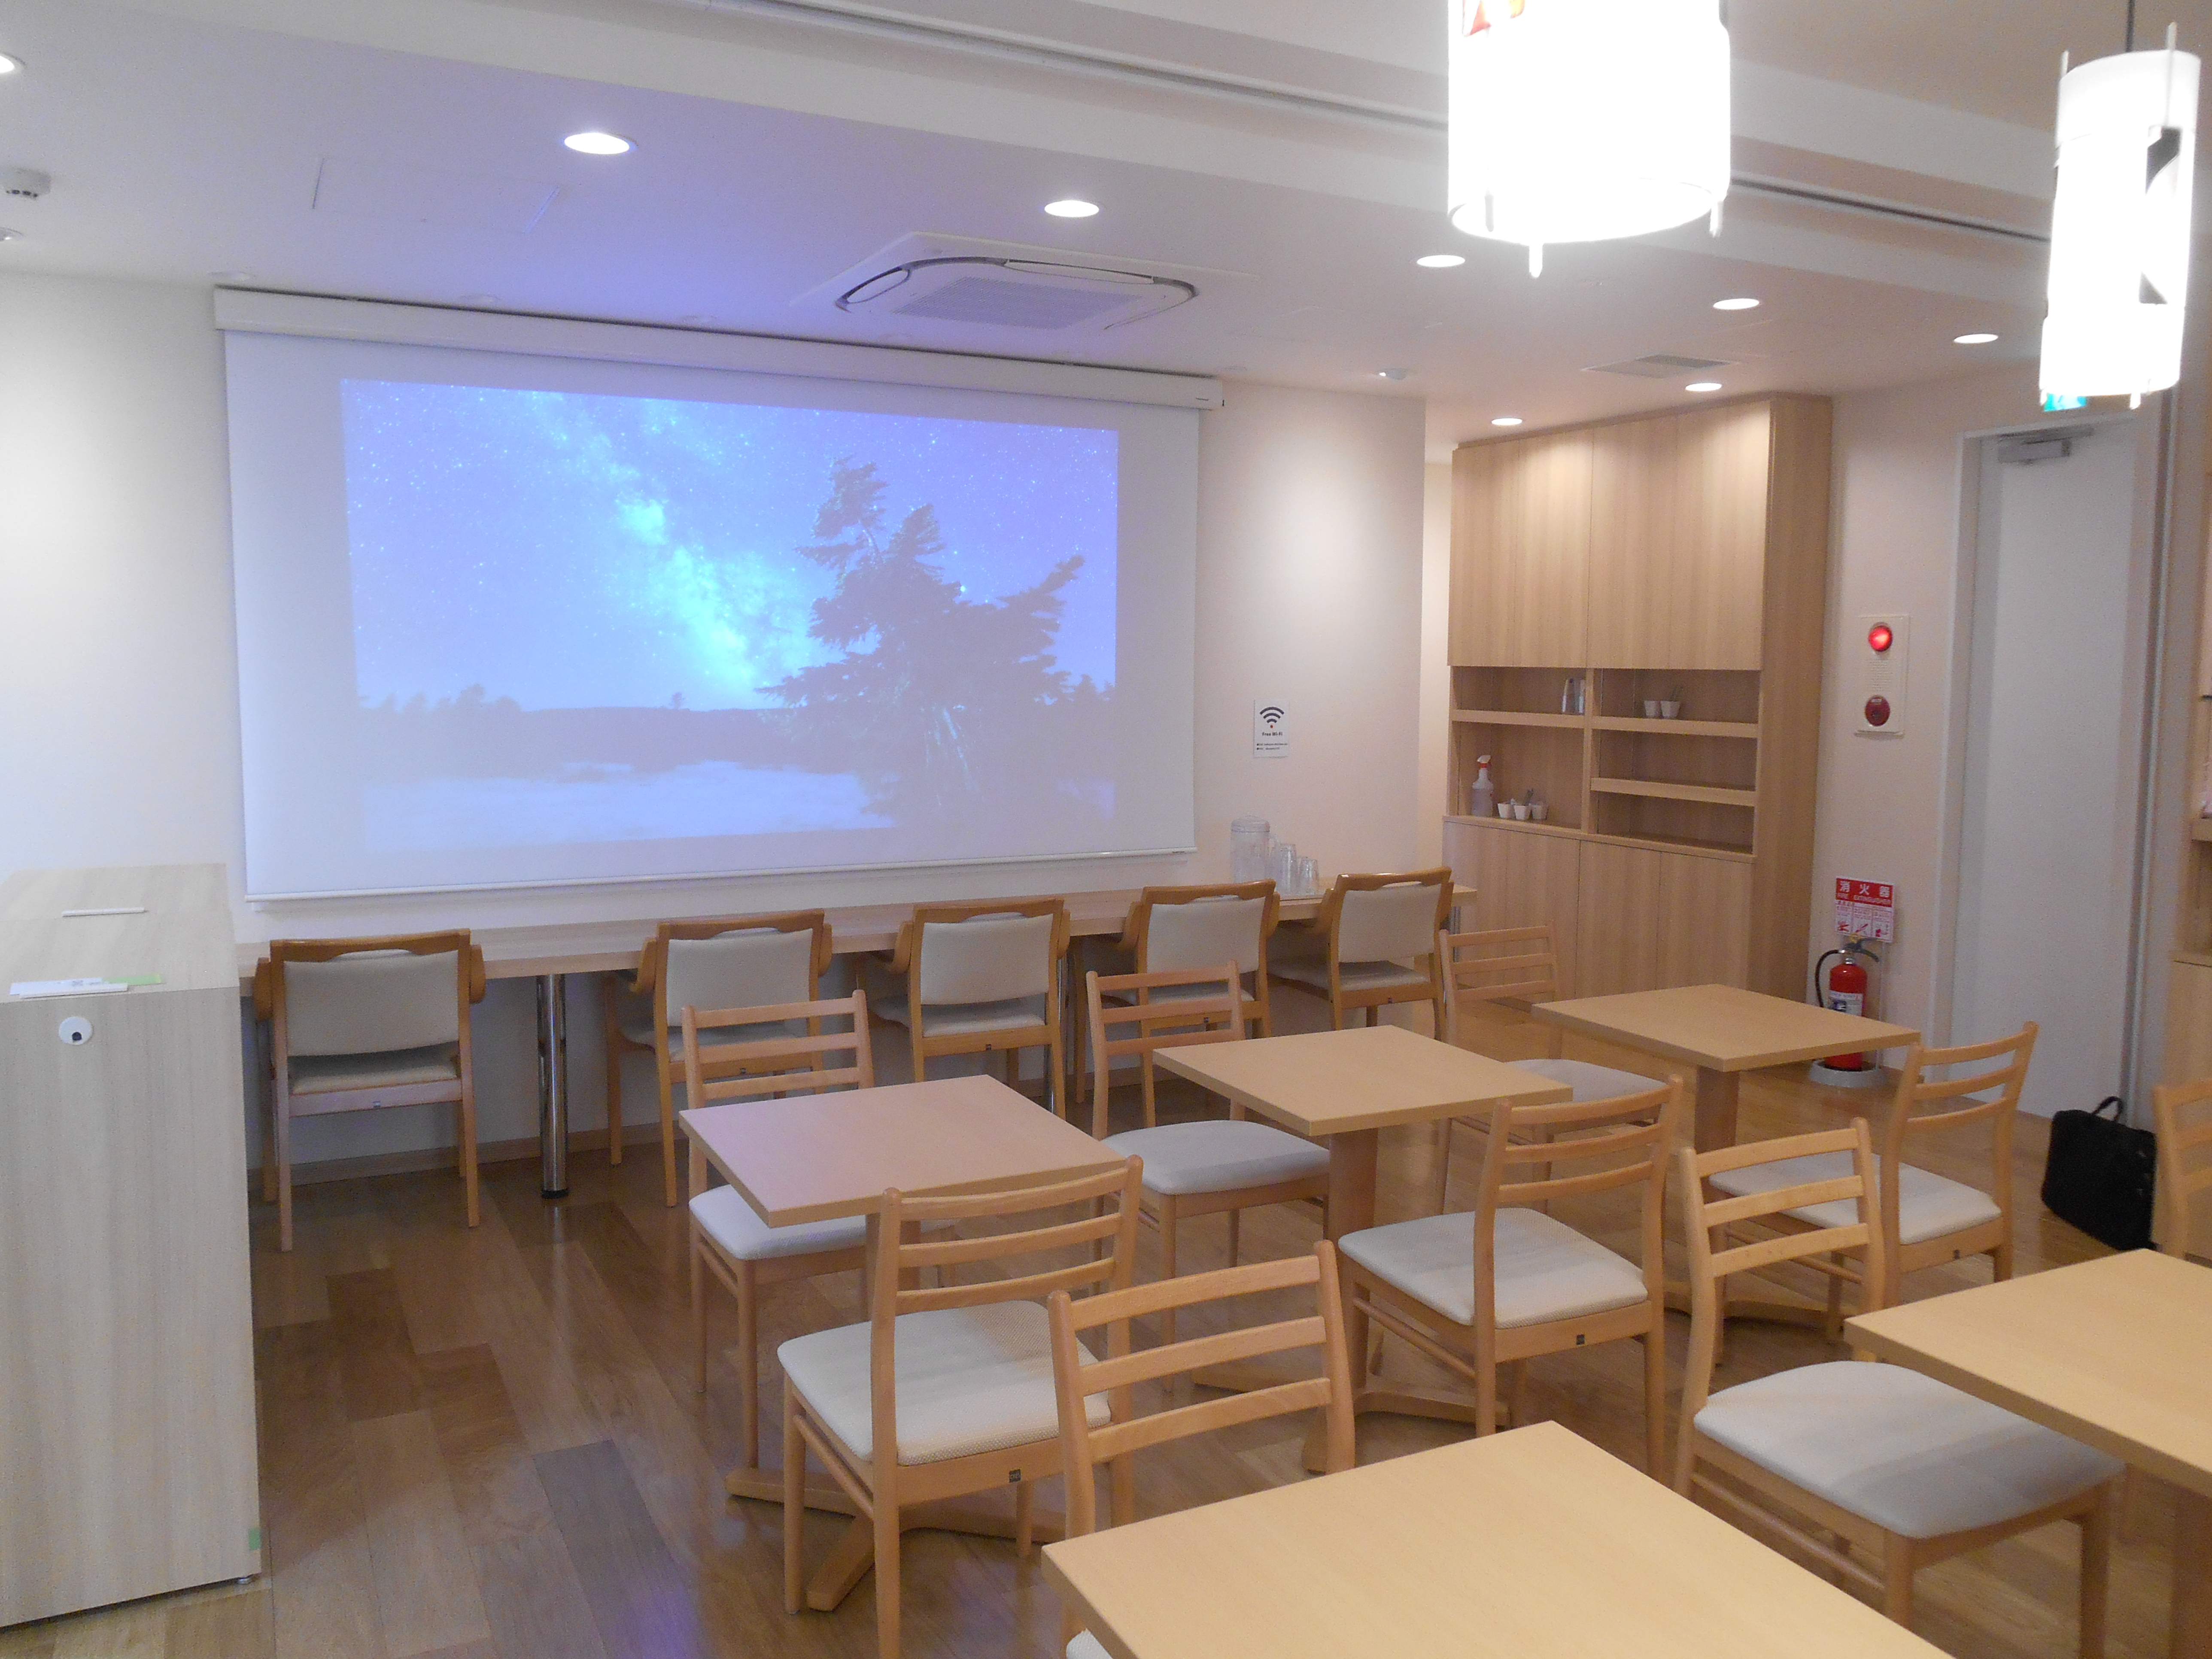 DSCN1358 - AoMoLink〜赤坂〜の第2回勉強会&交流会開催します。